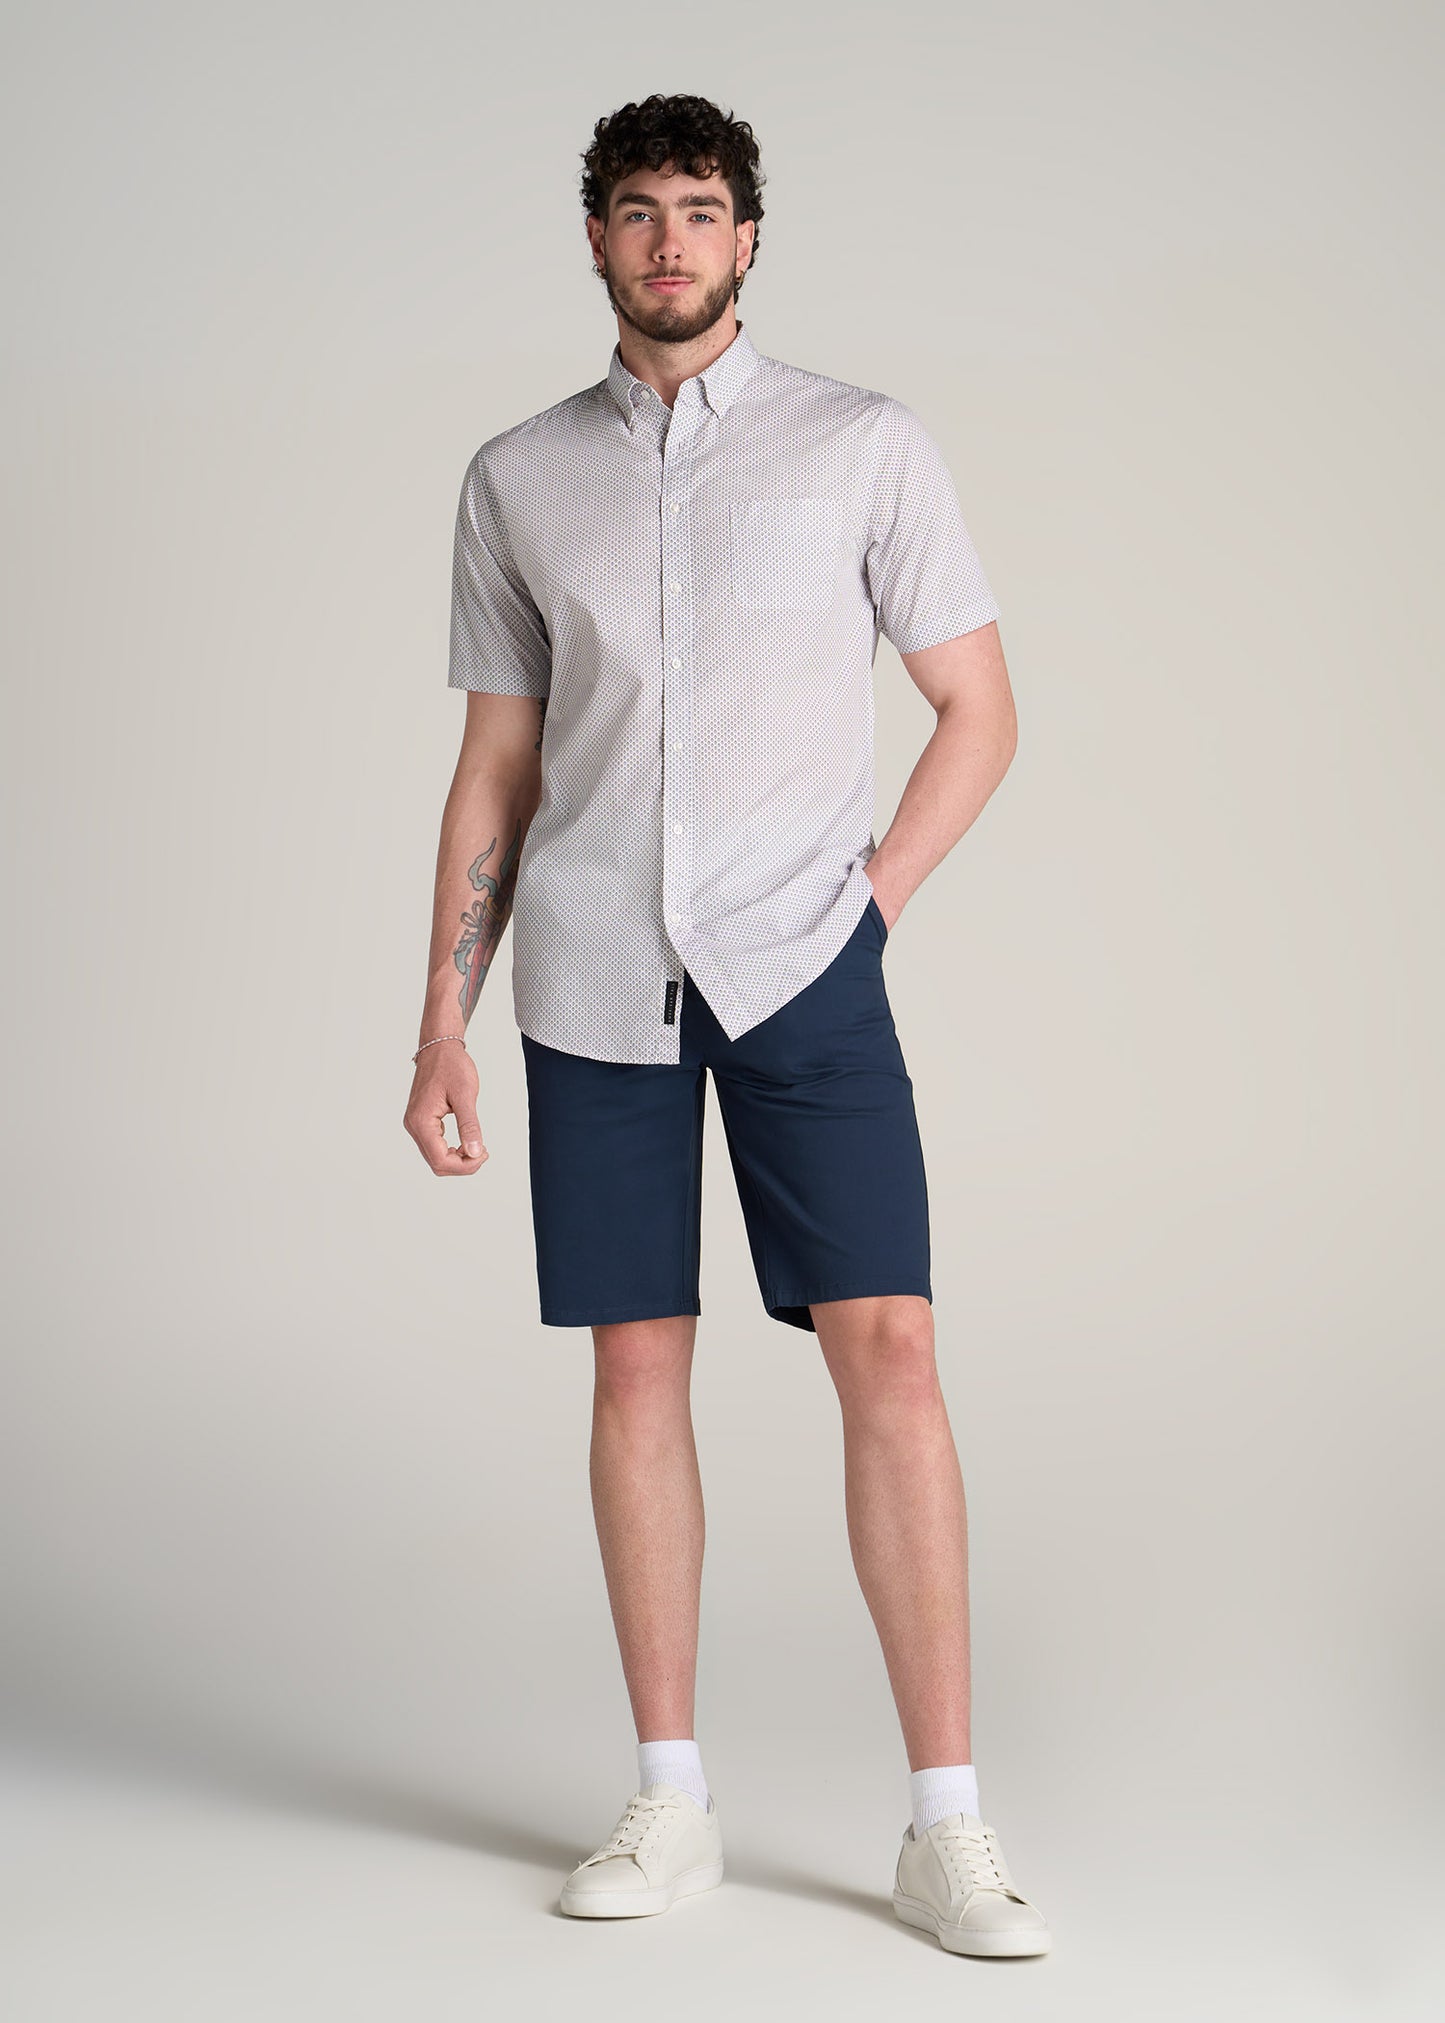         American-Tall-Men-Short-Sleeve-Button-Shirt-Brown-Blue-Diamond-Print-full